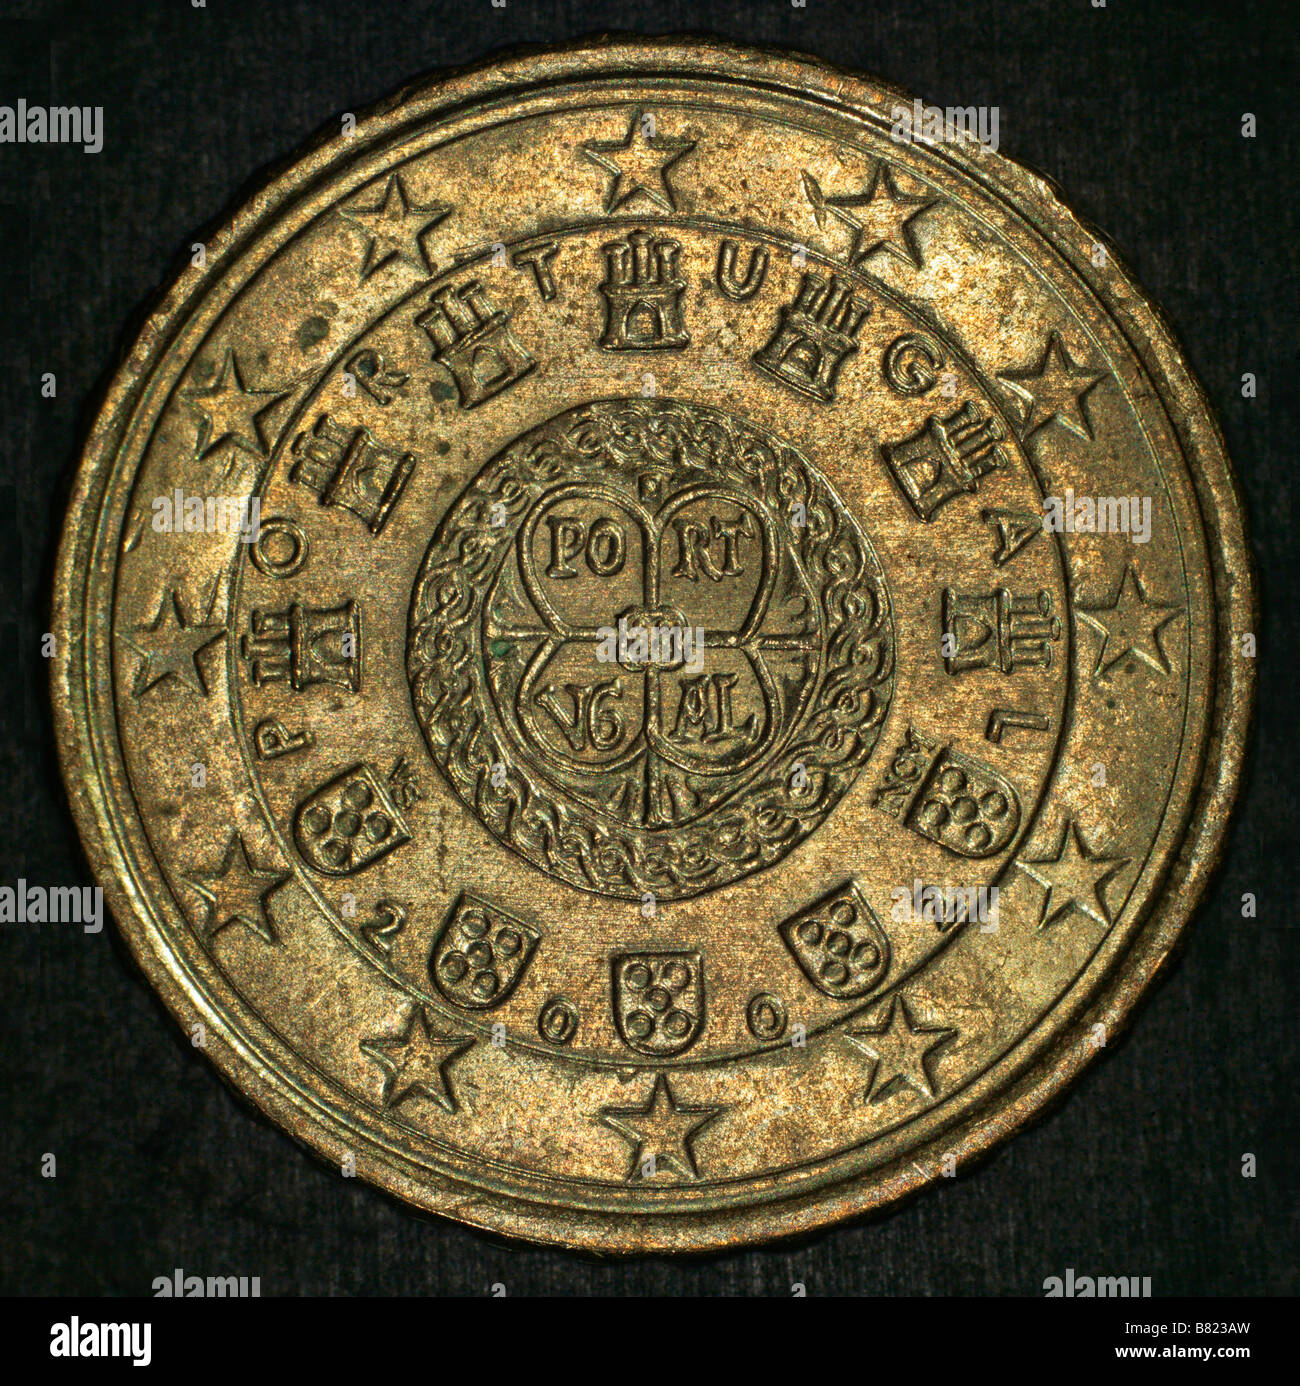 10 Euro cent coin axial illumination Stock Photo